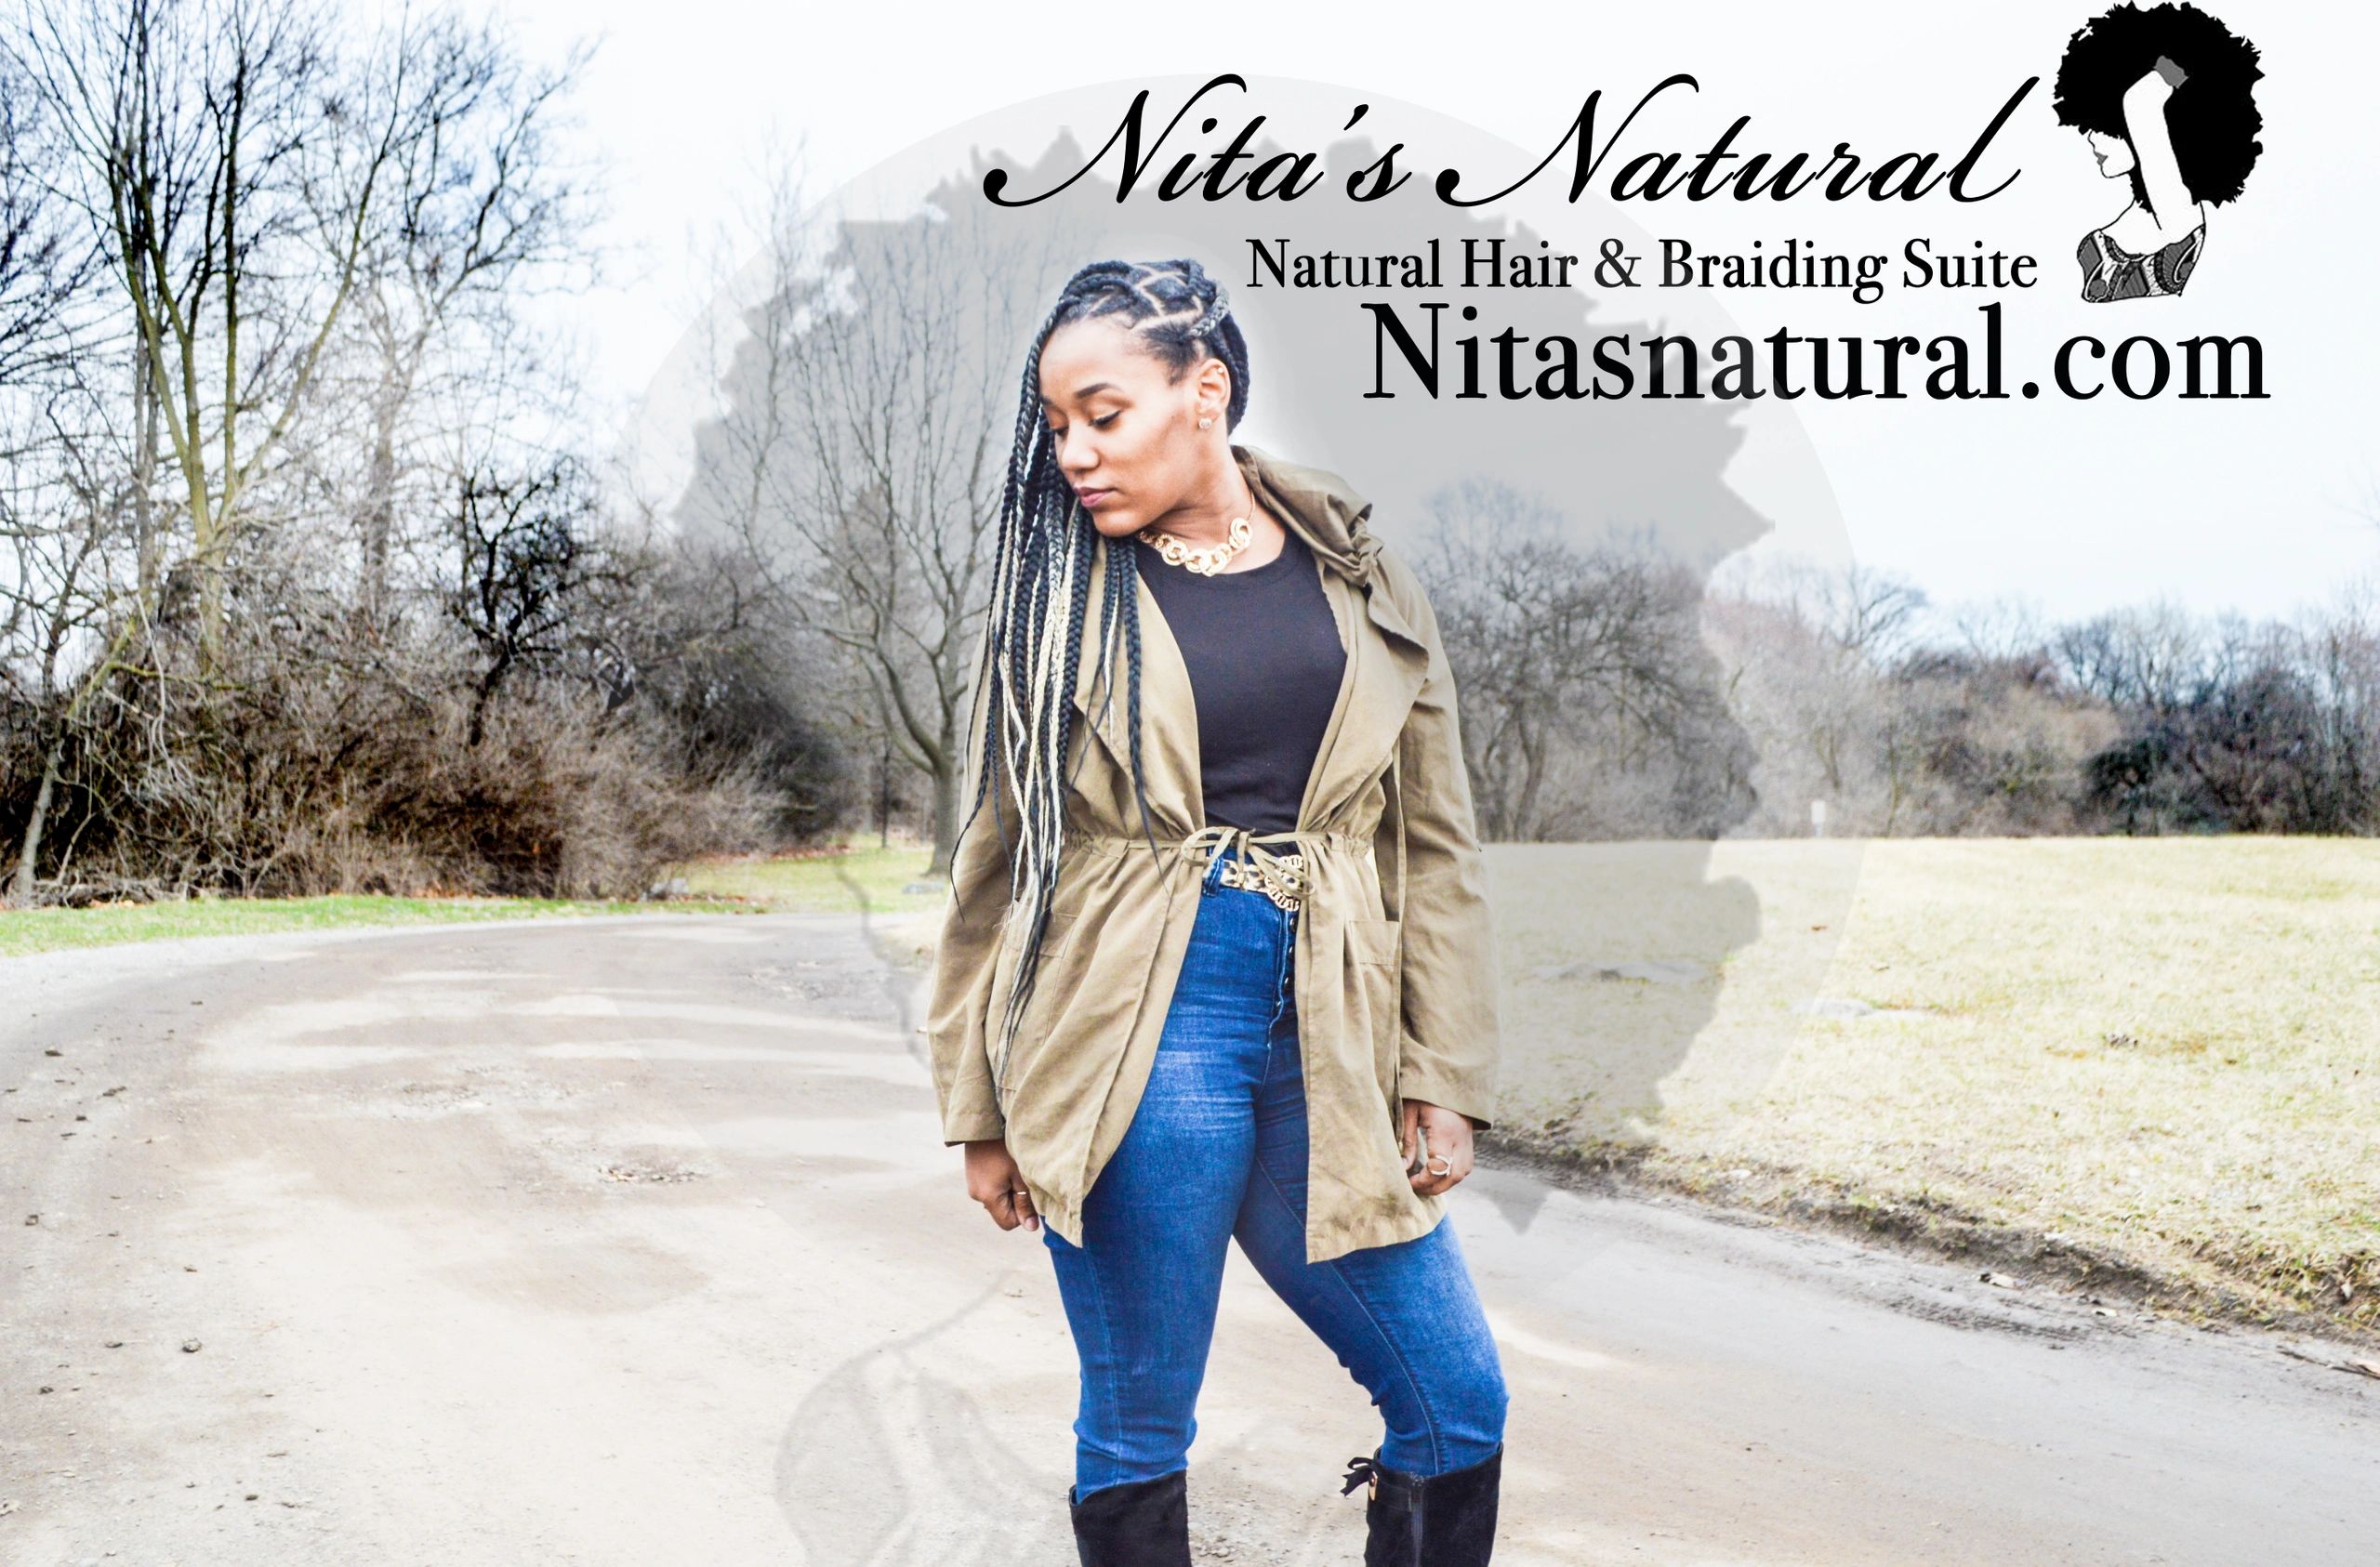 Nita's Natural - Hair Braiding, Natural Hair Care